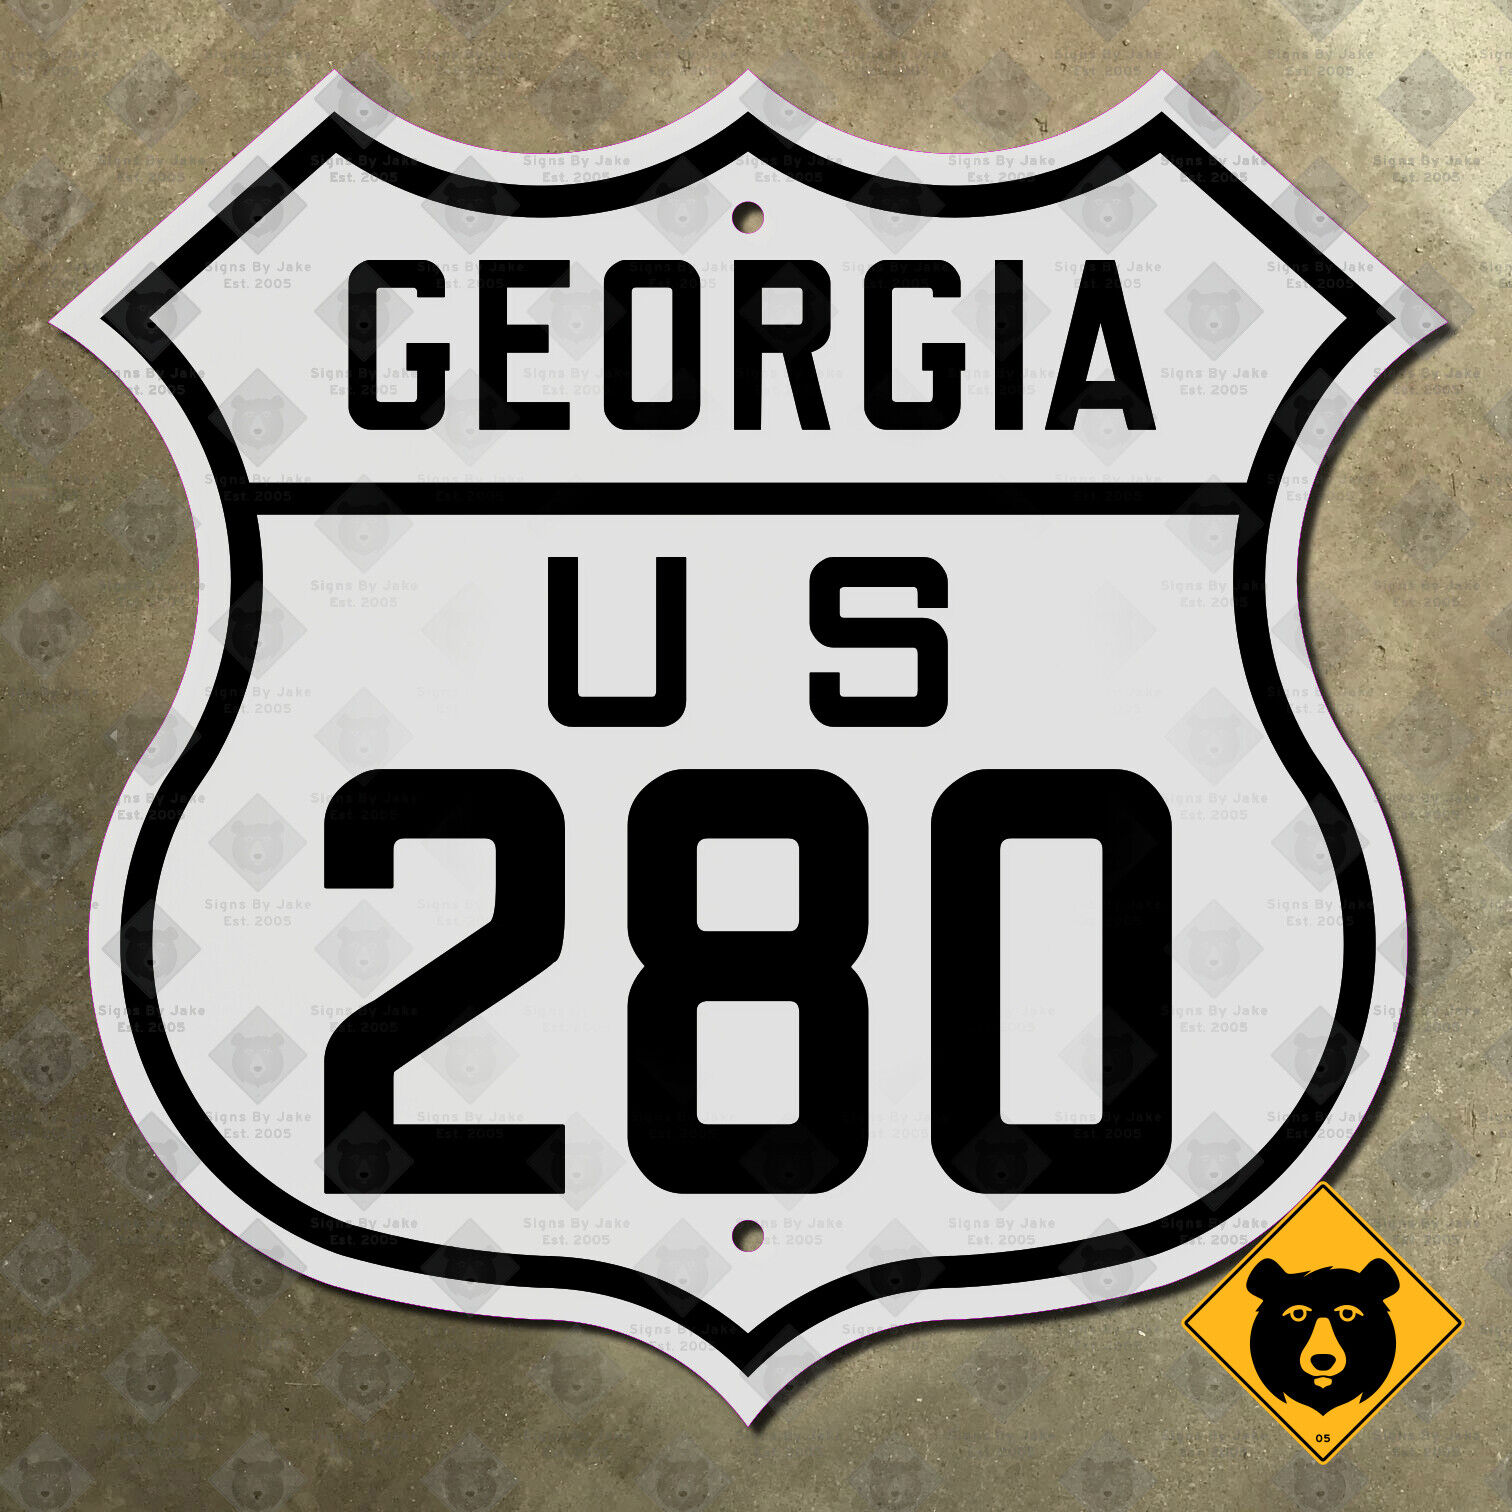 Georgia US Route 280 marker highway sign 1926 Cusseta Vidalia Blitchton 16x16